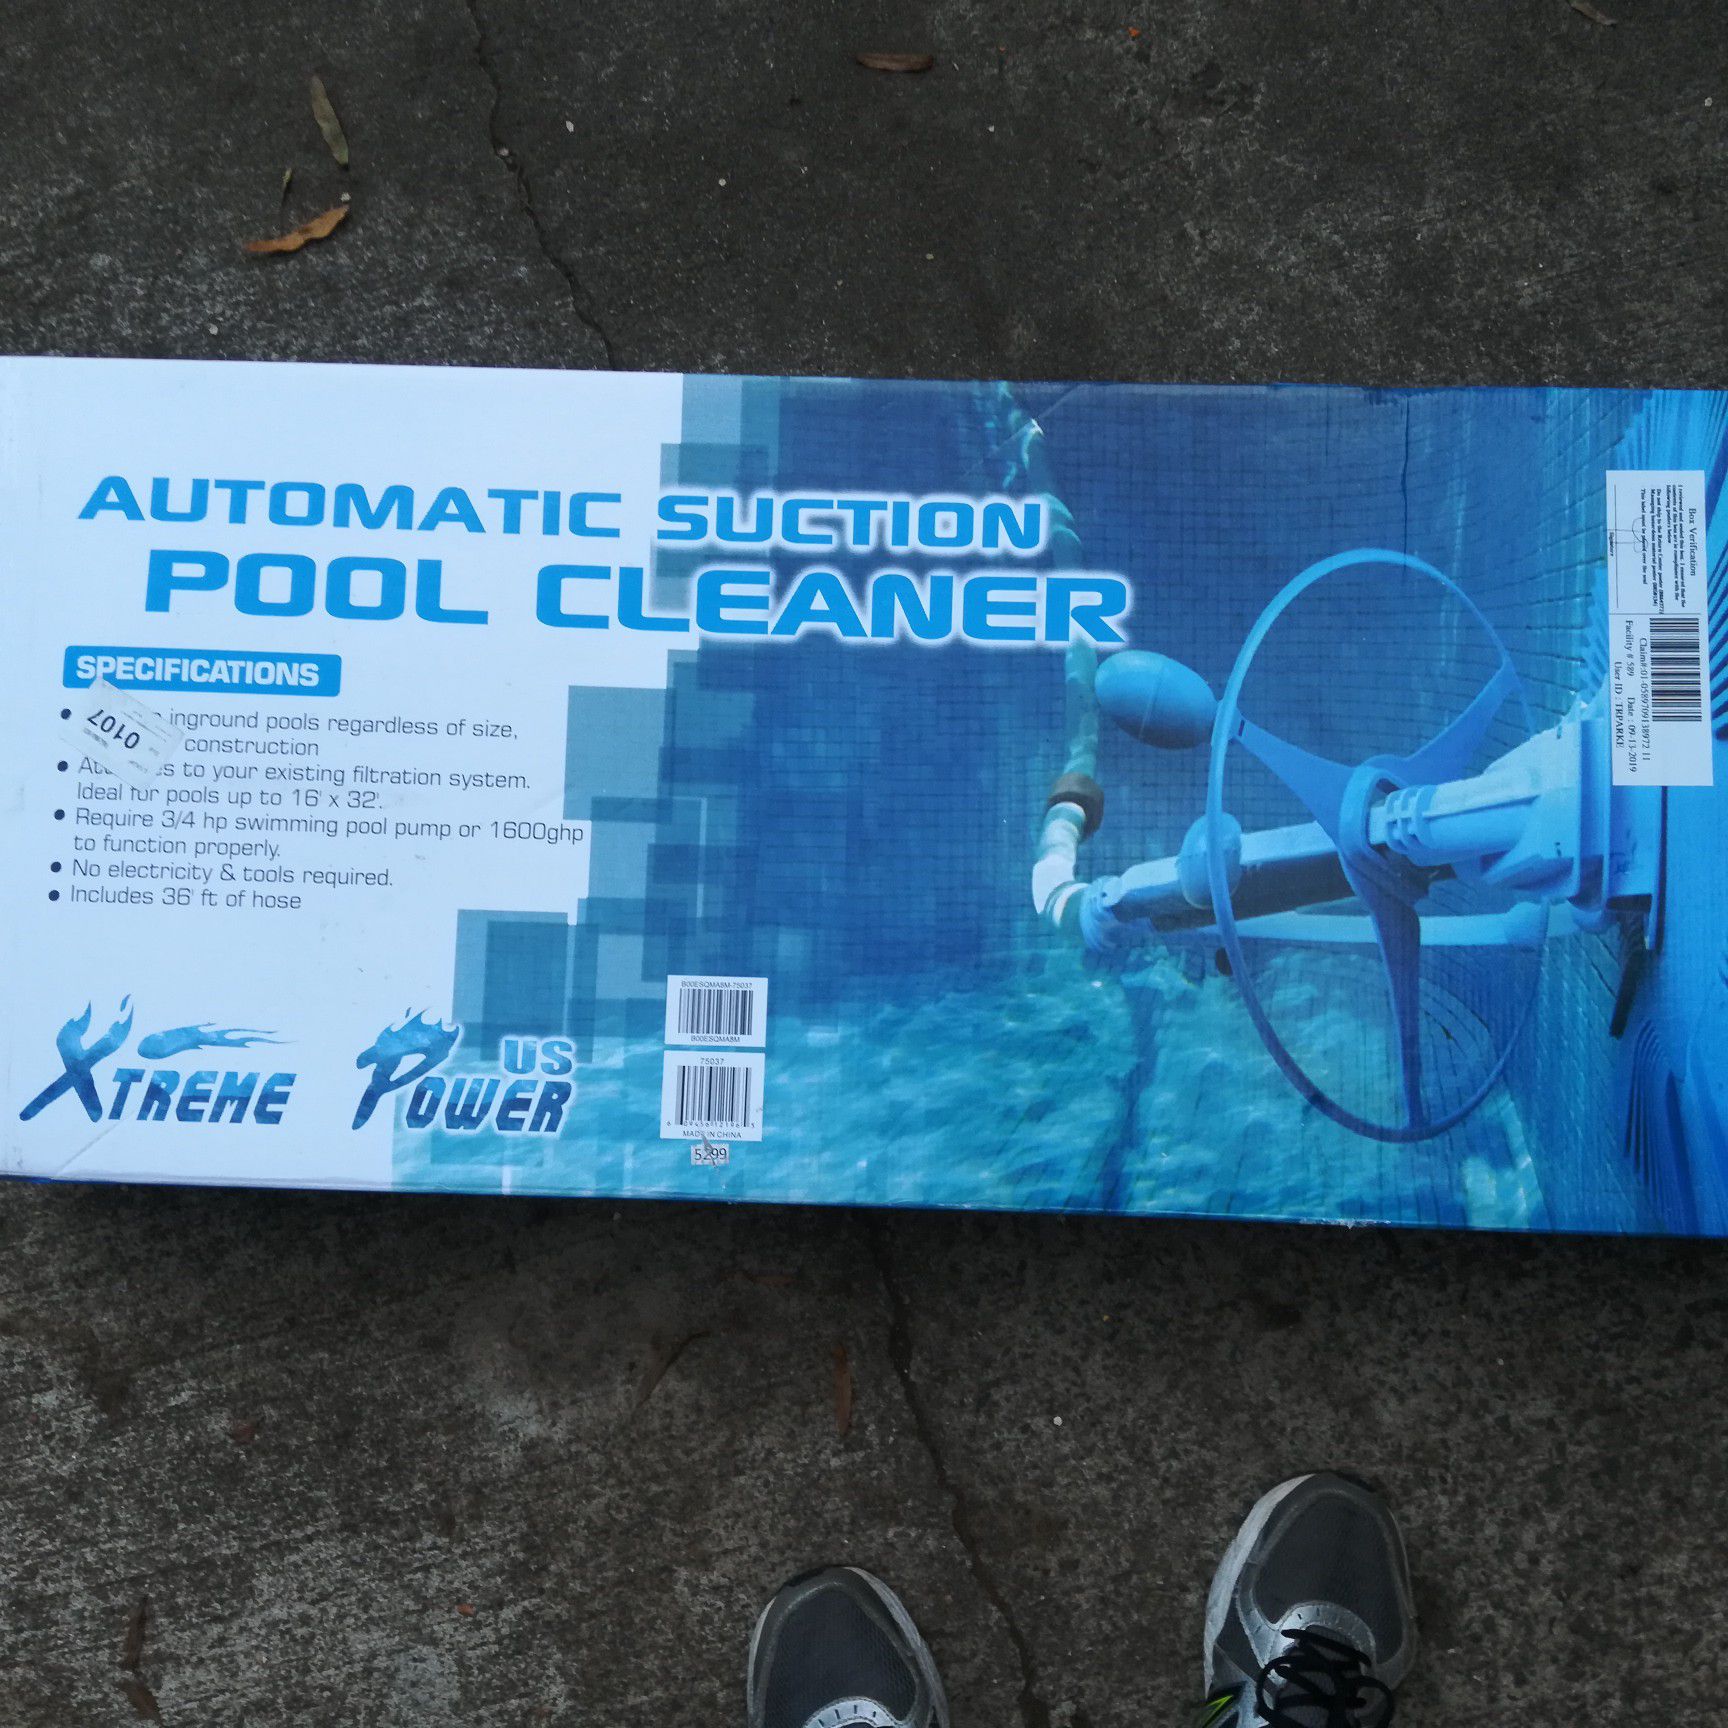 Pool cleaner